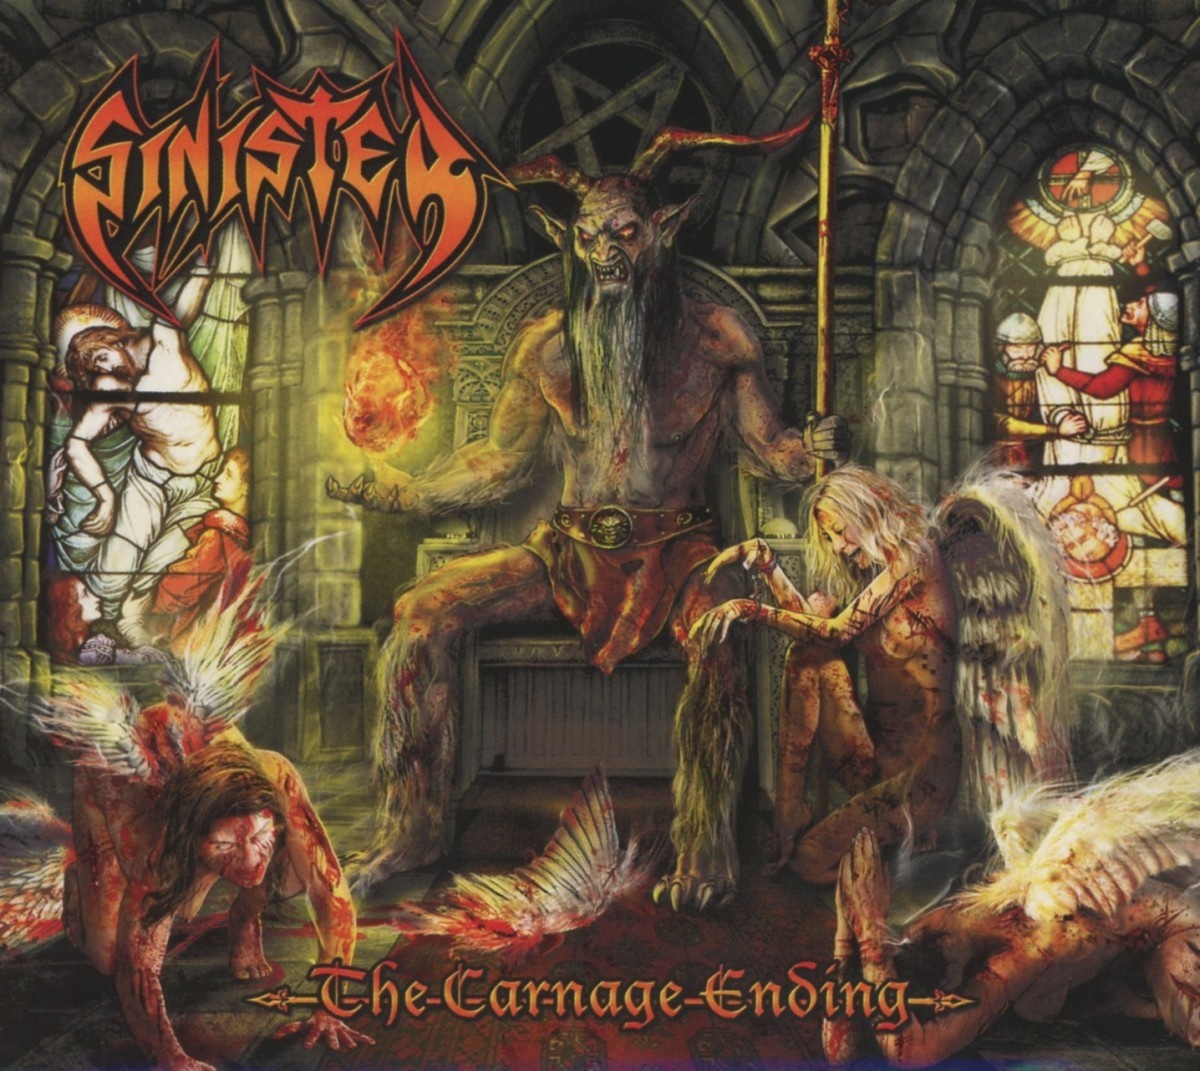 The Carnage Ending - Sinister. (CD)